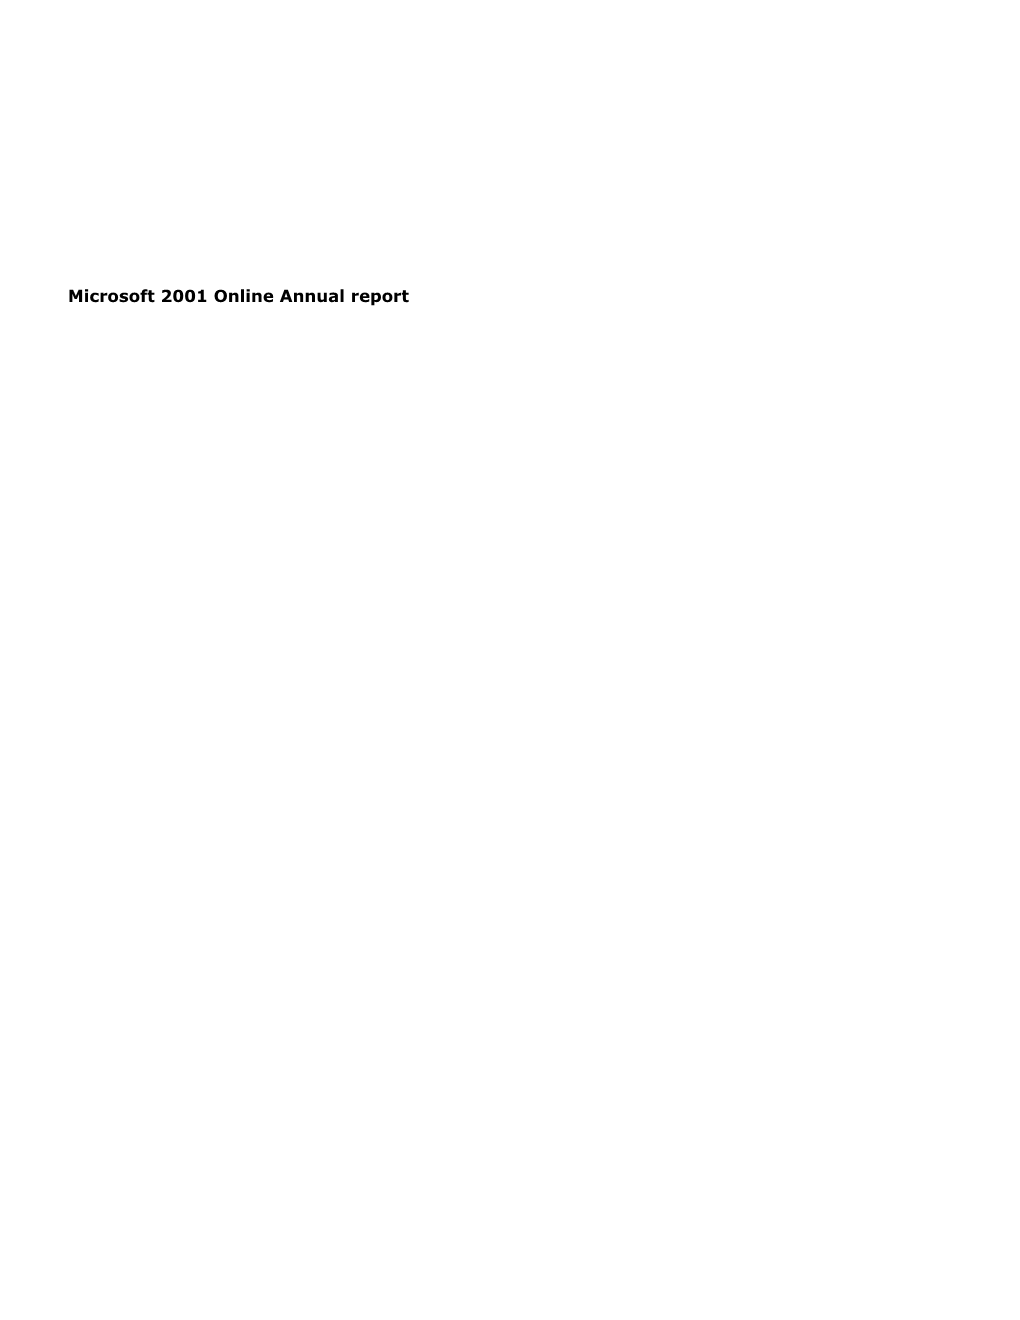 Microsoft 2001 Online Annual Report